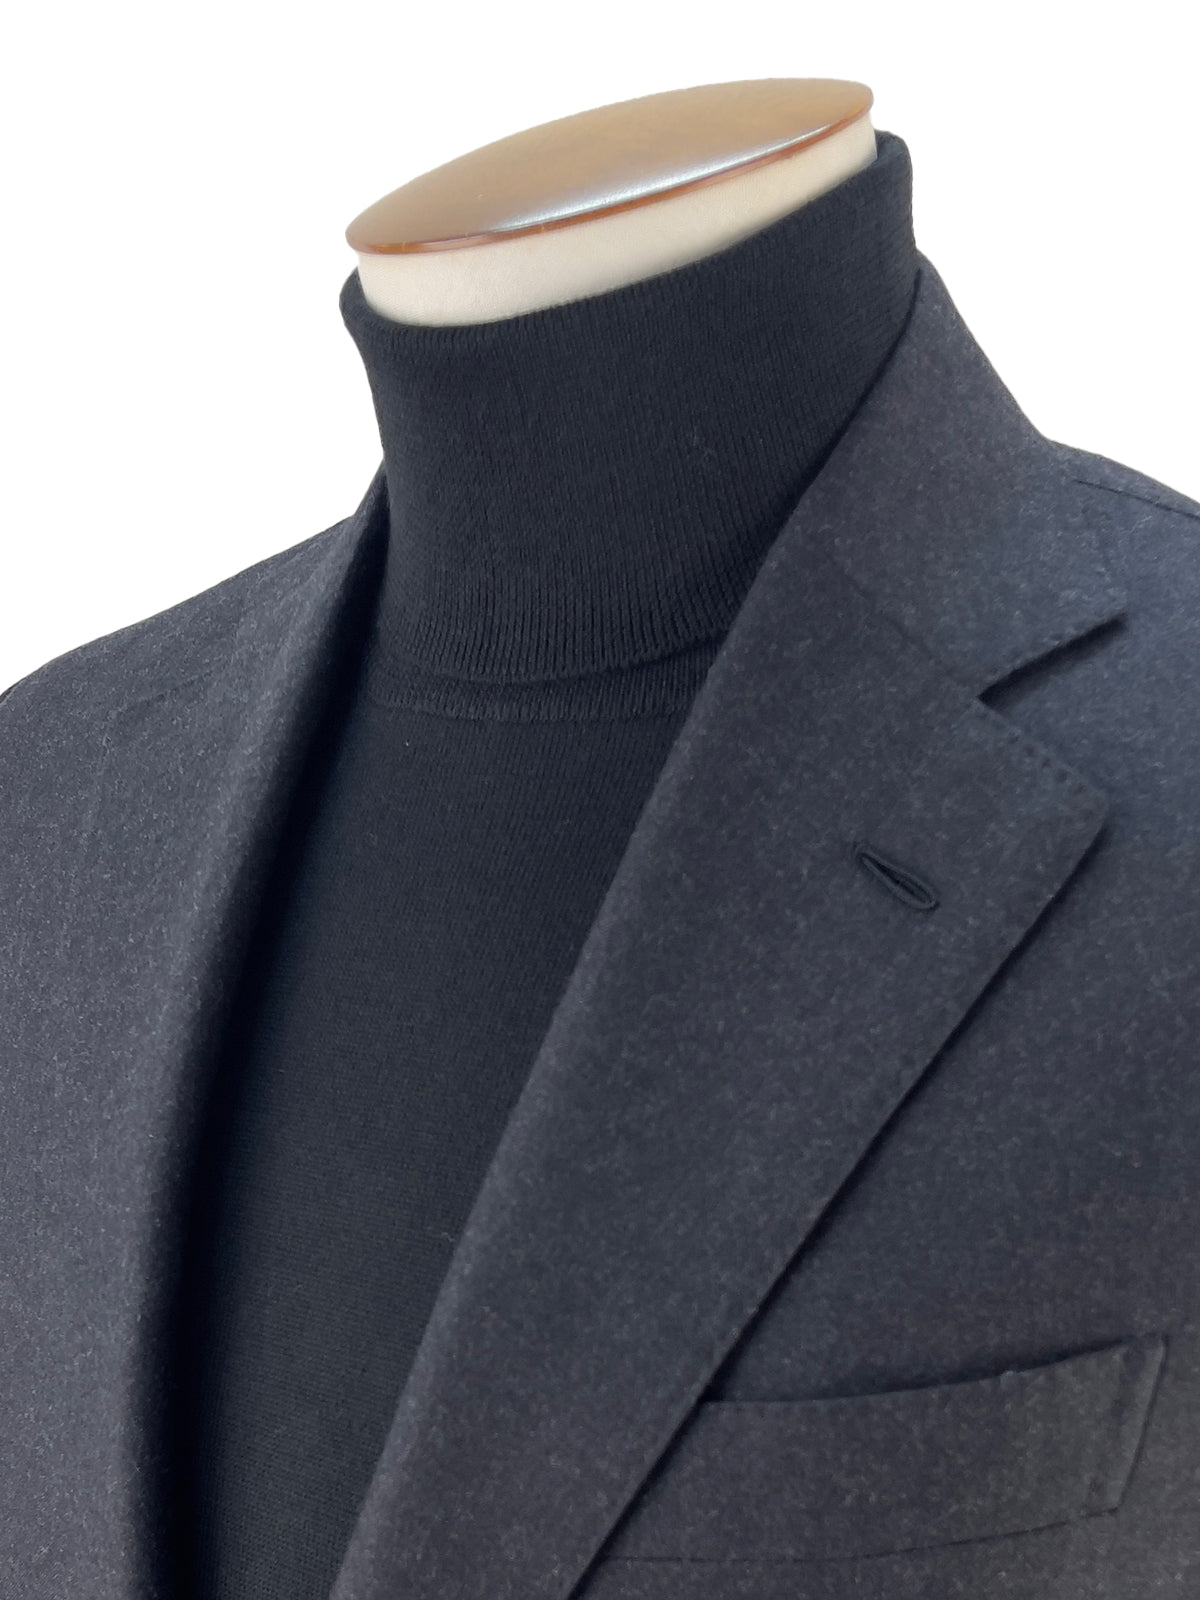 Black Merino Wool Rollneck Sweater